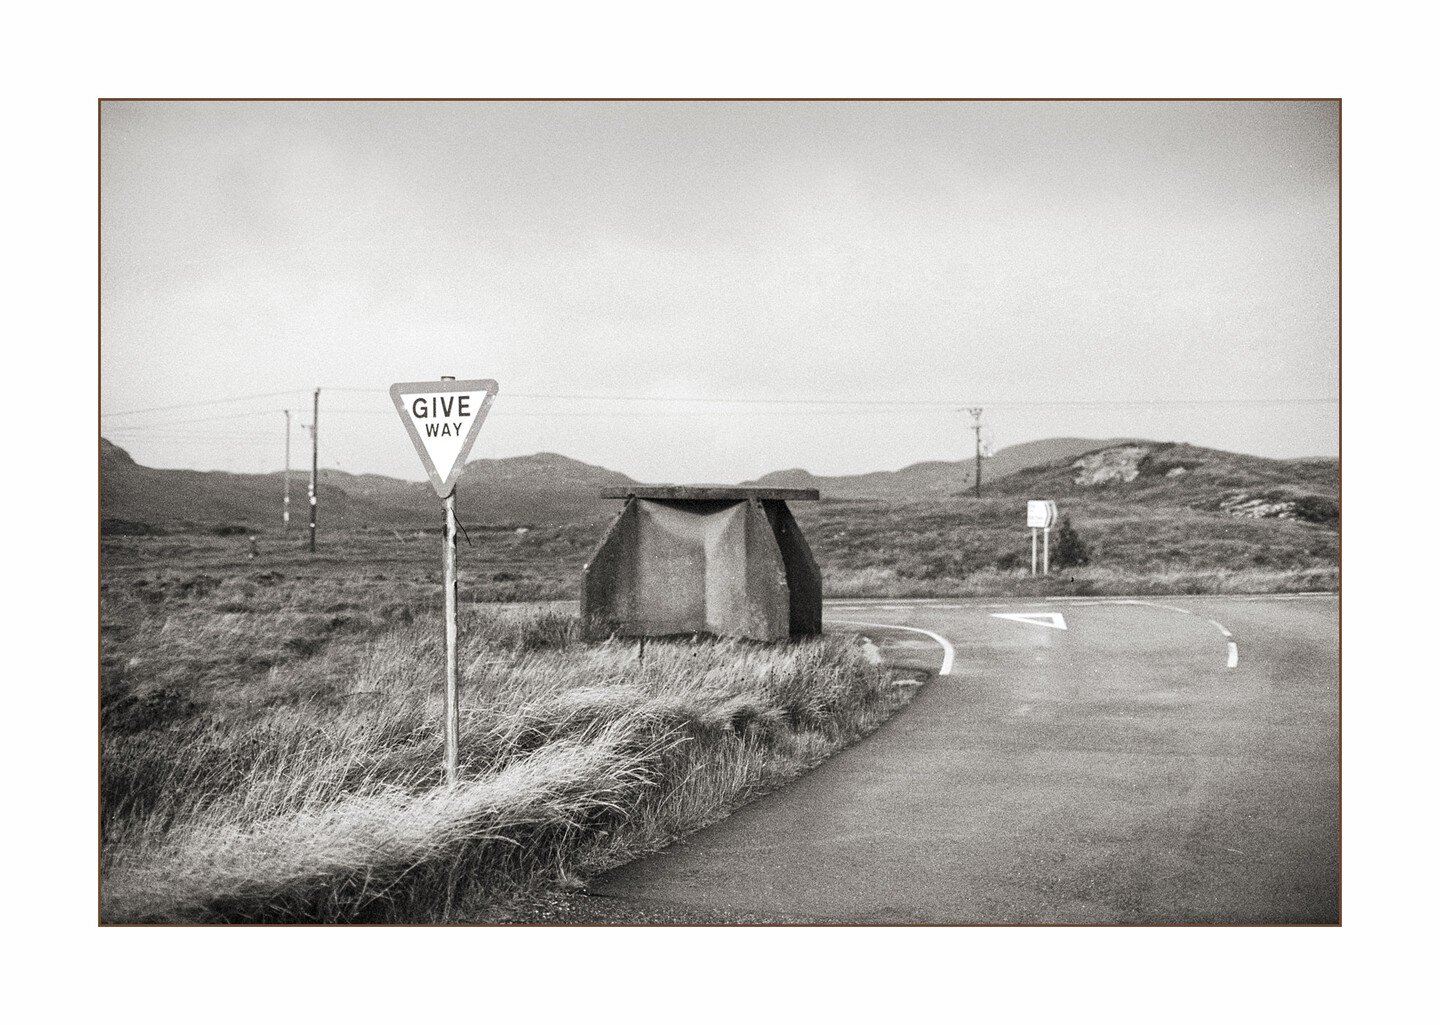 4-way bus shelter #isleoflewis #outerhebrides #brutalism #brutalist #brutalistarchitecture #nikonfm2n #nikkor50mmf12 #delta400 #ilford #ilfordphoto #ilfordphotography #xt3 #adoxxt3 #adox #nikon #nikonfilmcamera #35mm #35mmfilm #35mmfilmphotography #b